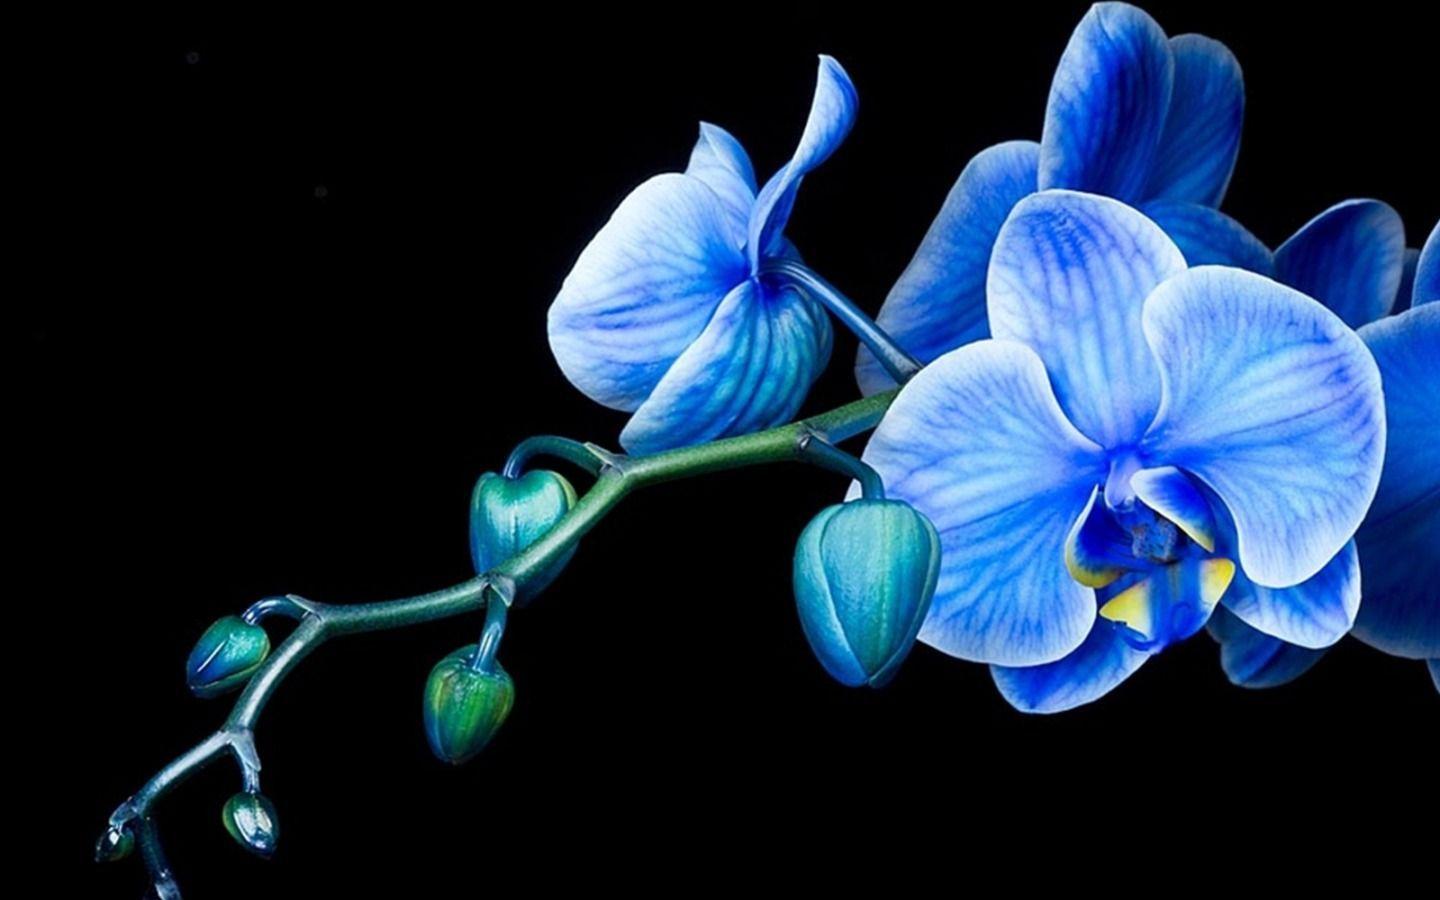 eletragesi: Blue Orchid Wallpaper Image